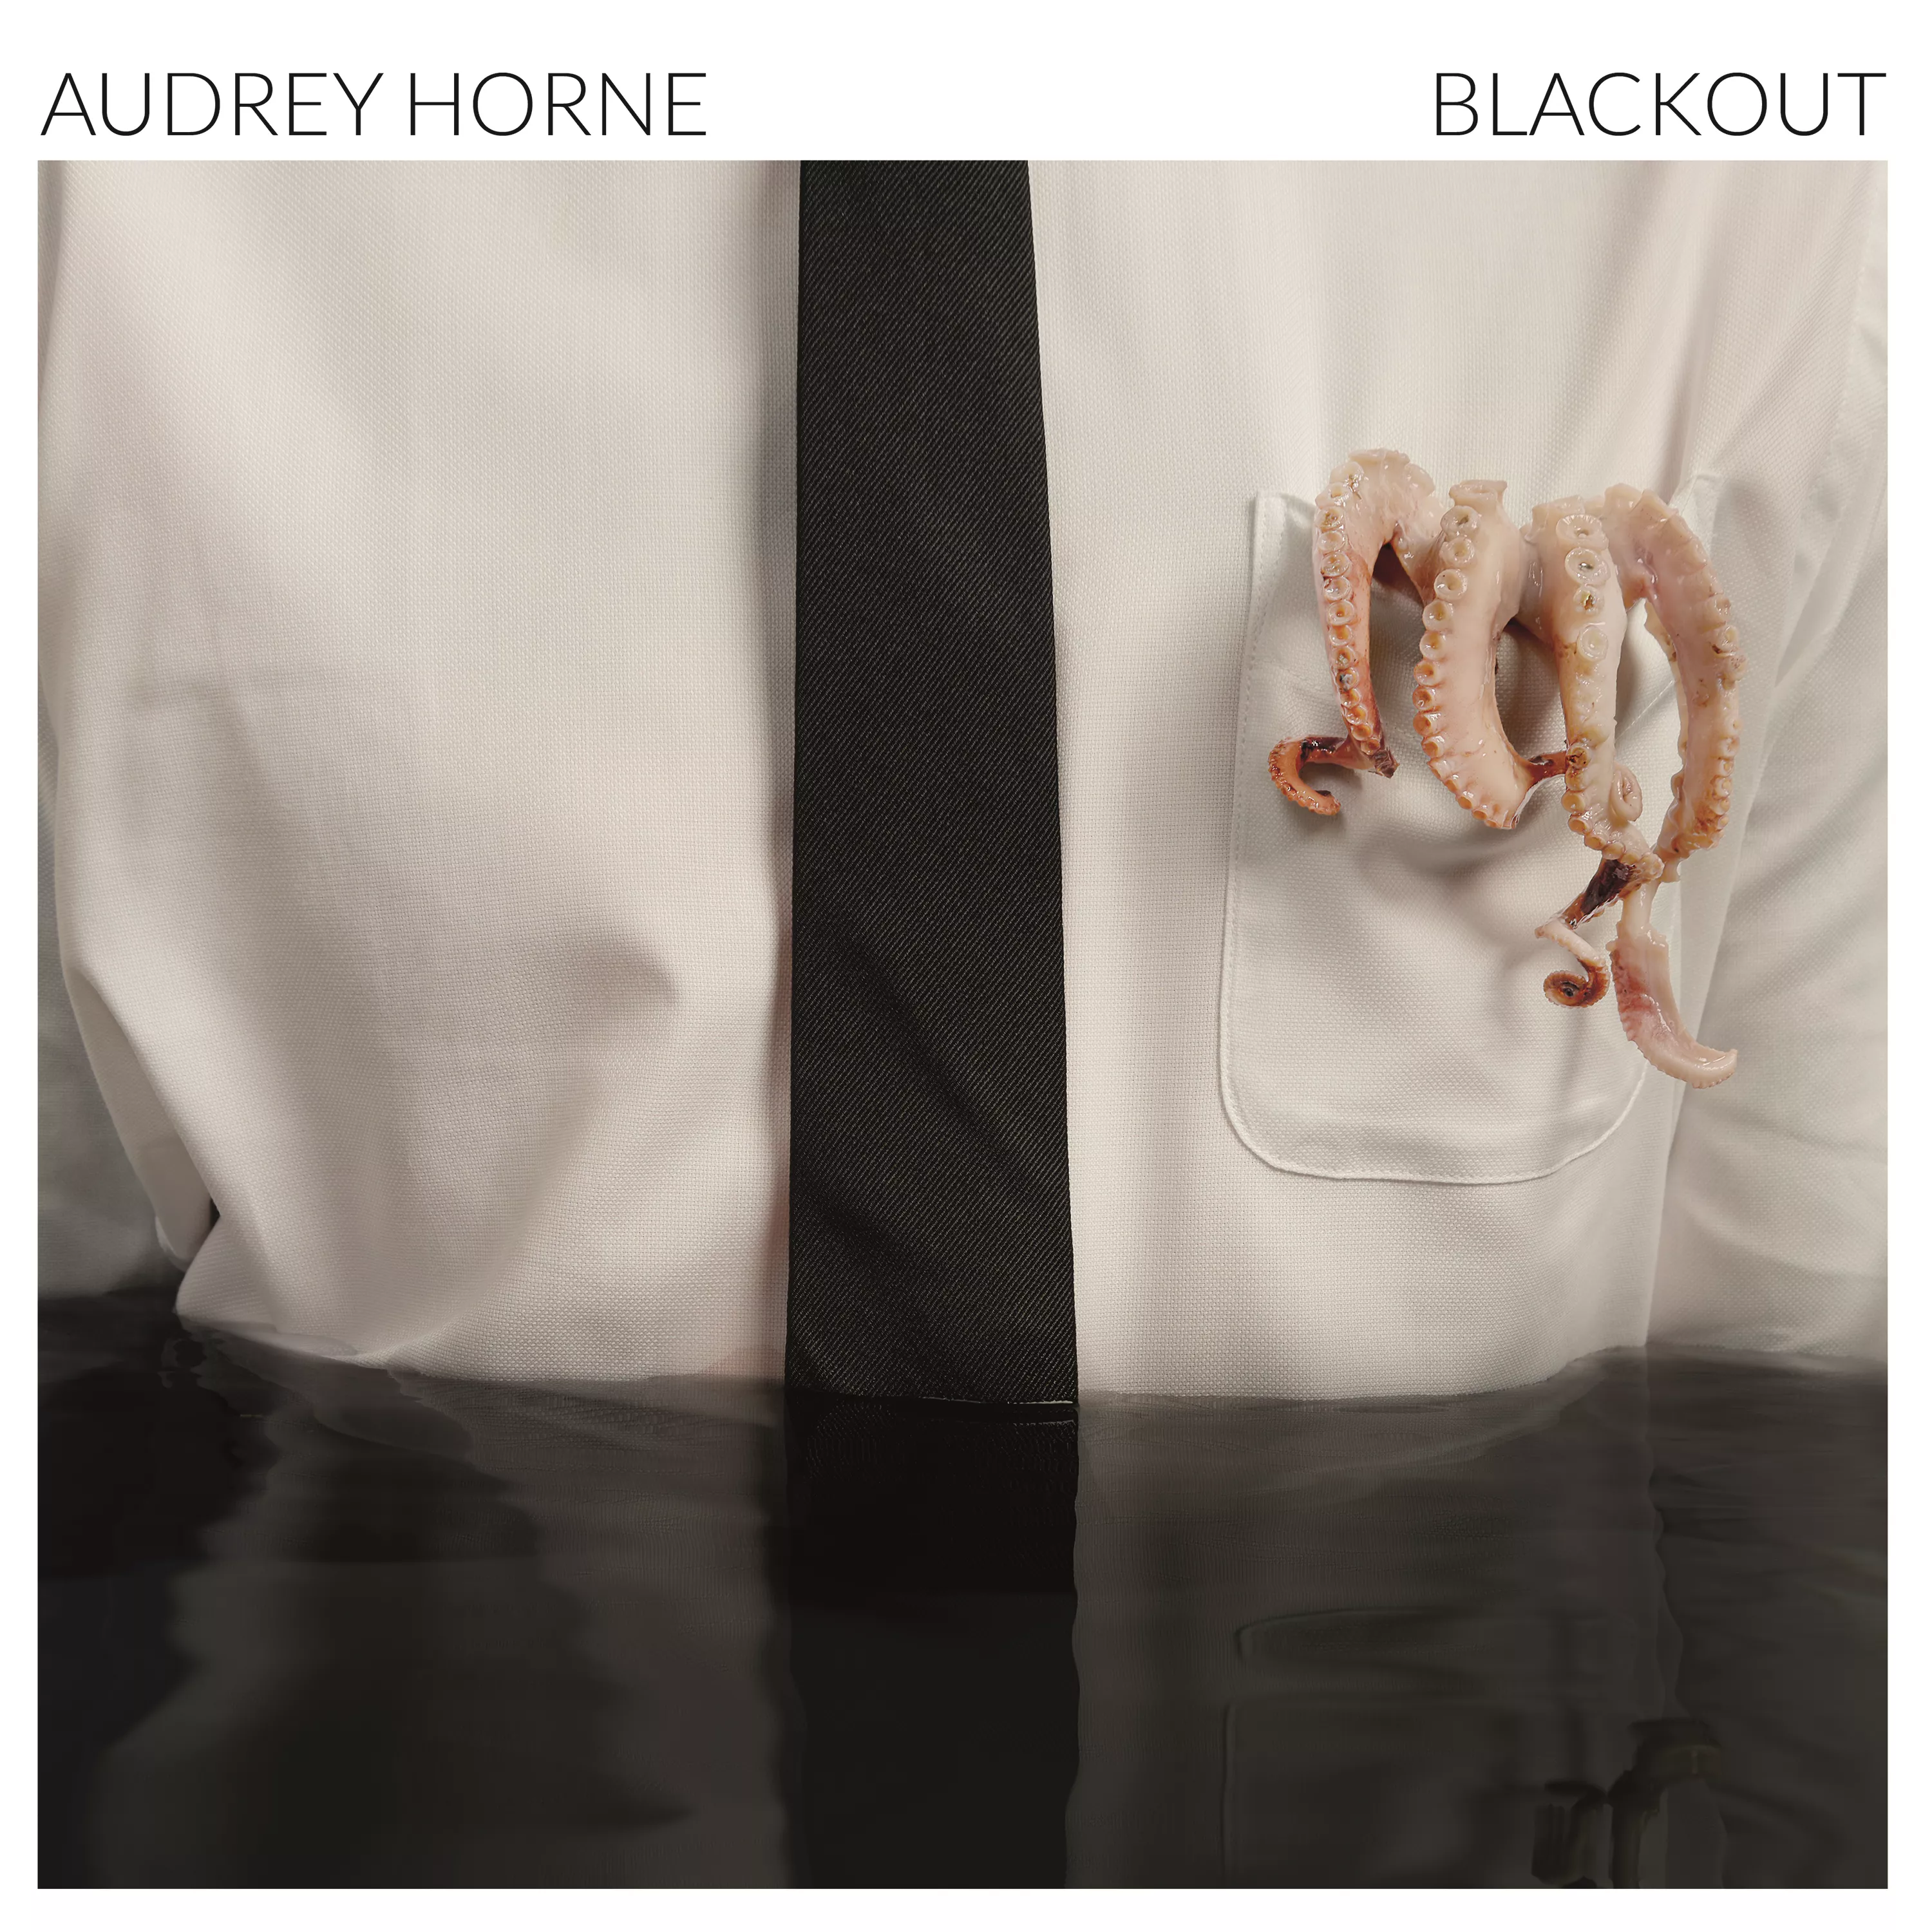 Blackout - Audrey Horne